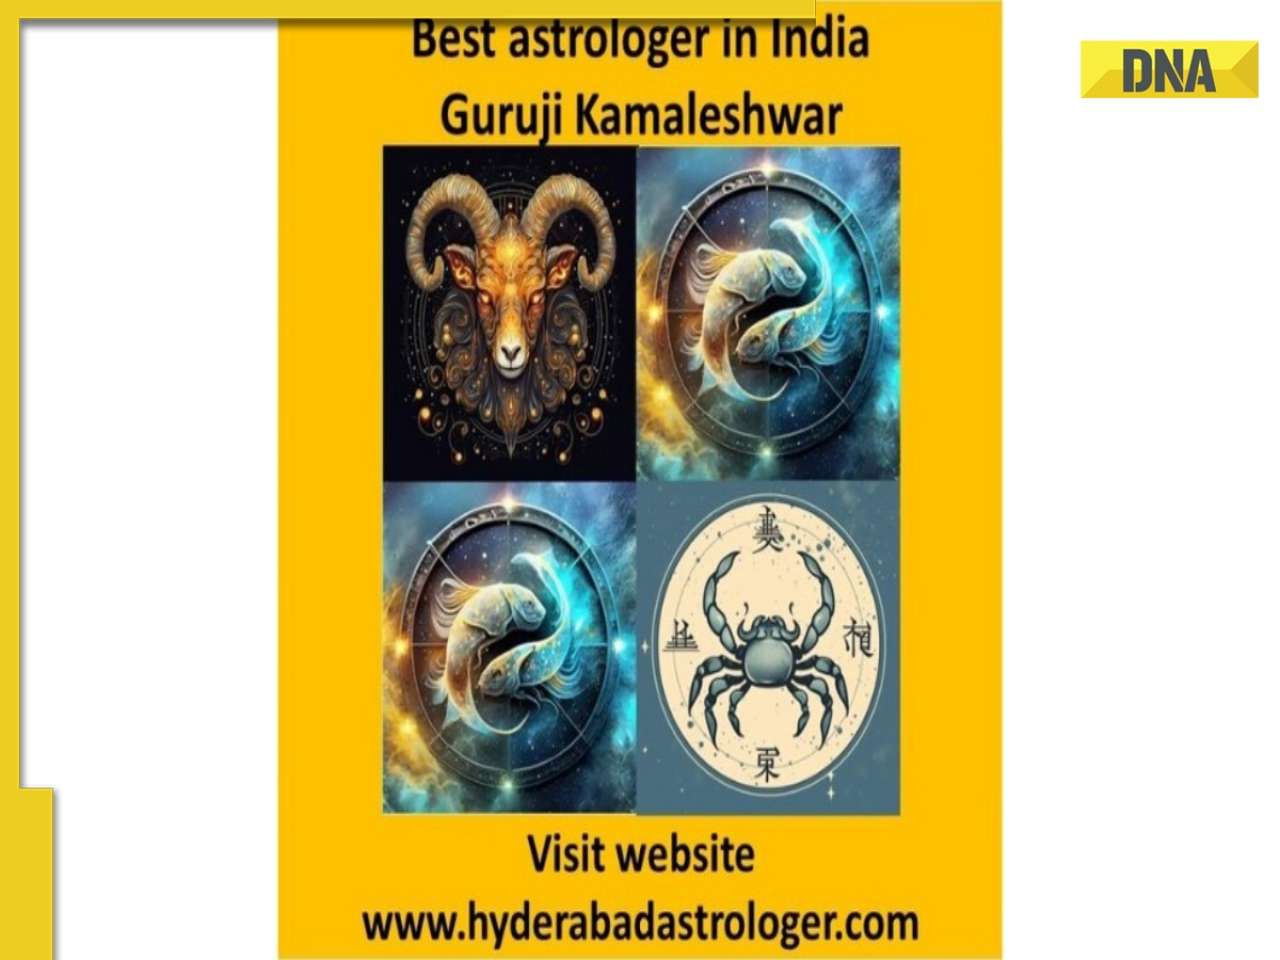 Reliable astrologer Guruji Kamaleshwar is among everlasting top 5 best astrologers in India